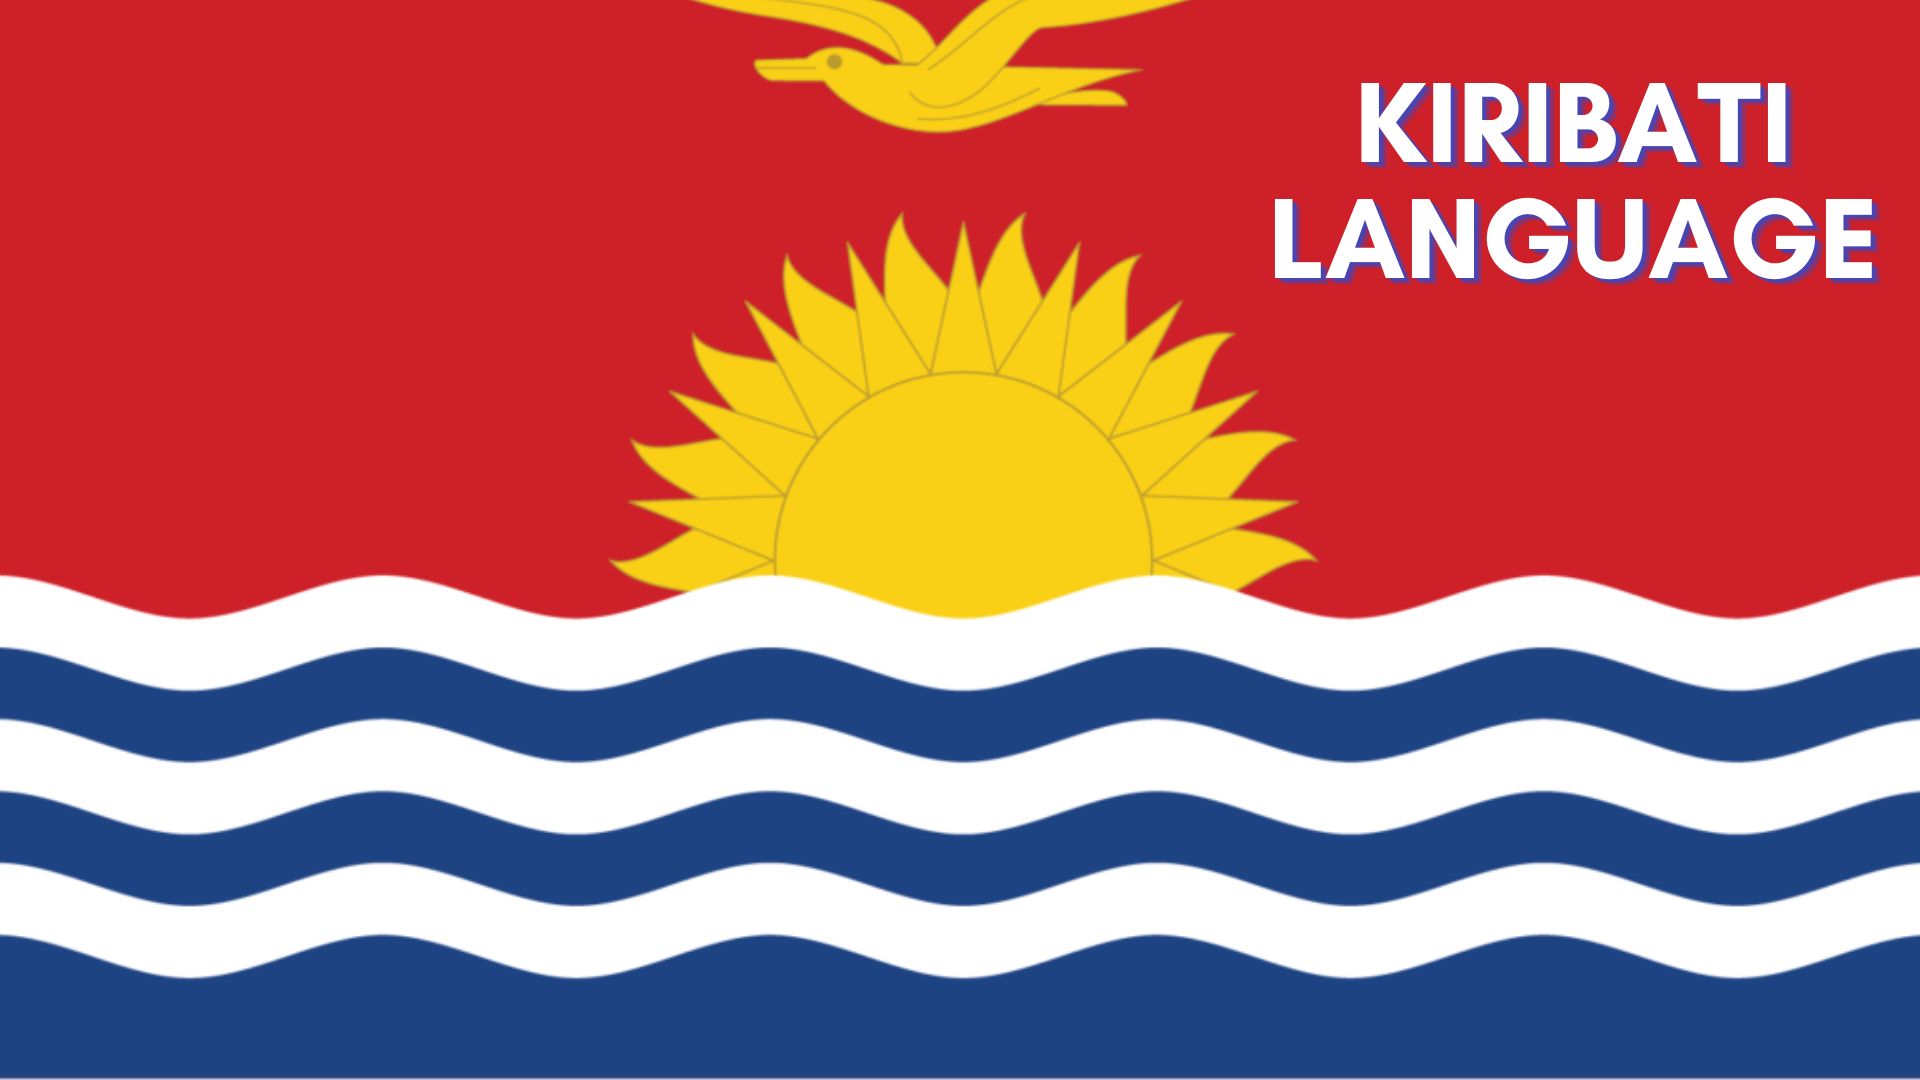 Kiribati Language - The People Of Kiribati Speak Gilbertese Most